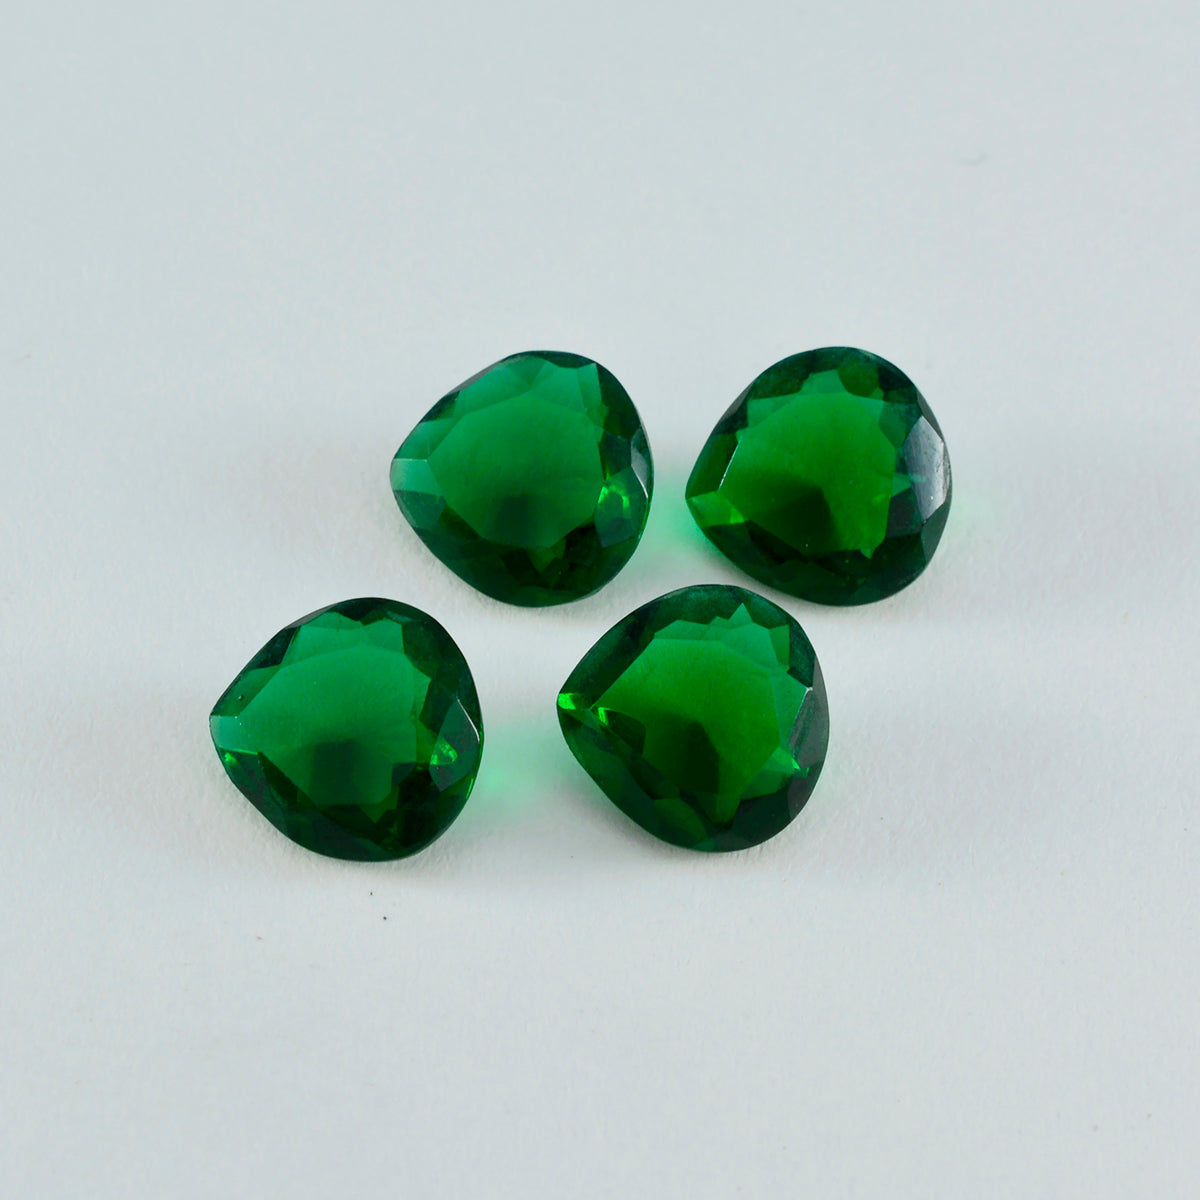 Riyogems 1PC Green Emerald CZ Faceted 13x13 mm Heart Shape sweet Quality Loose Gemstone